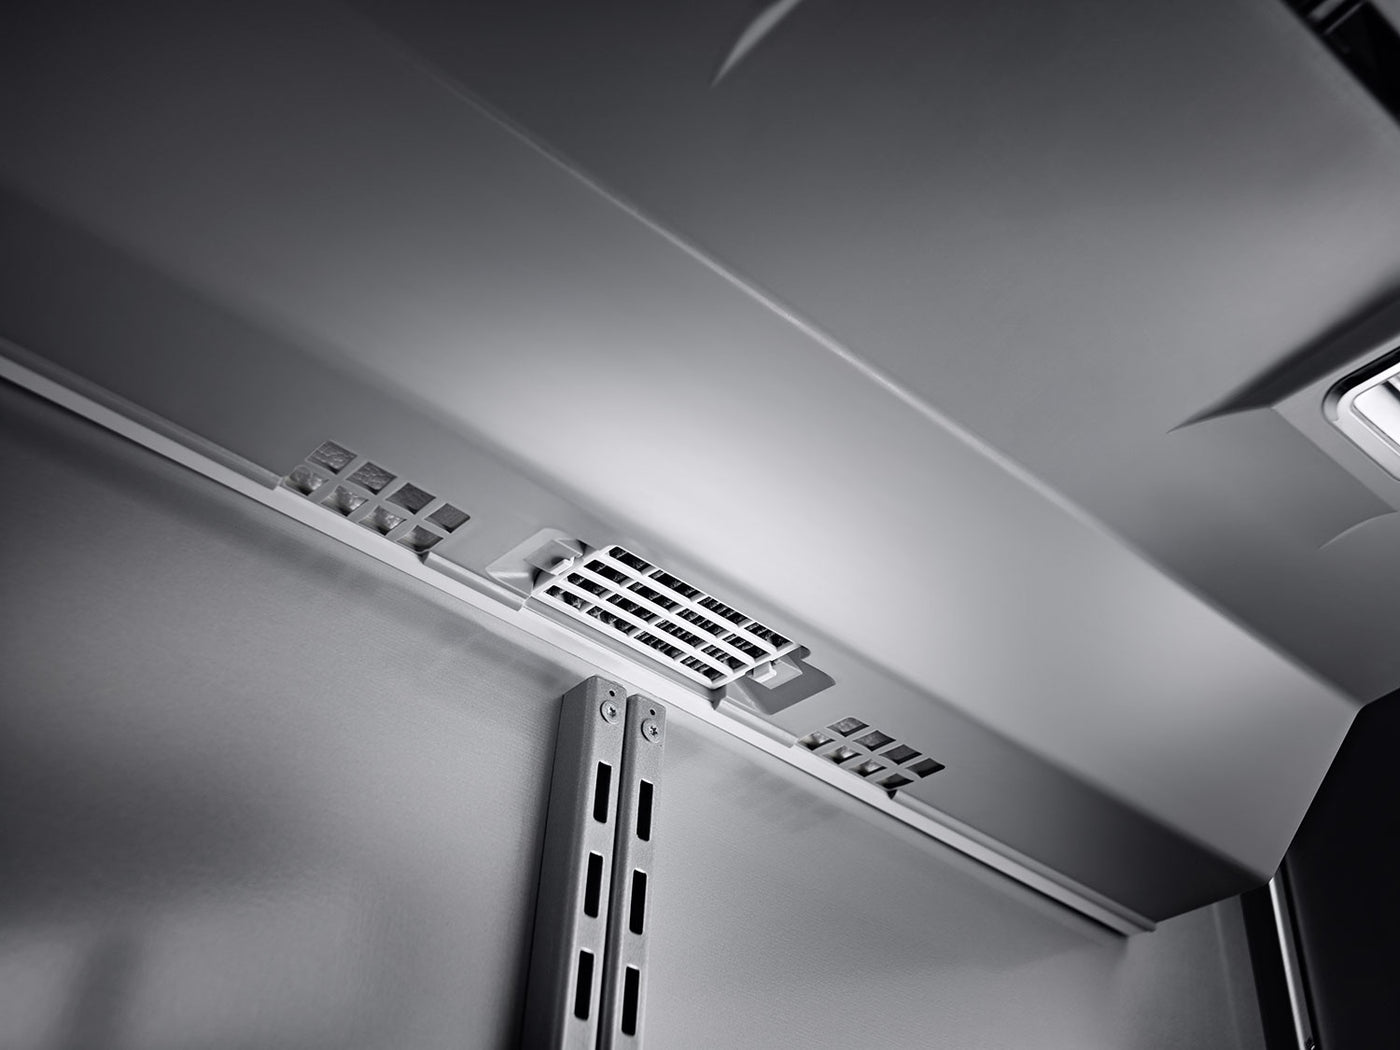 KitchenAid Stainless Steel Bottom-Freezer Refrigerator (20.9 Cu. Ft.)  - KBBR306ESS